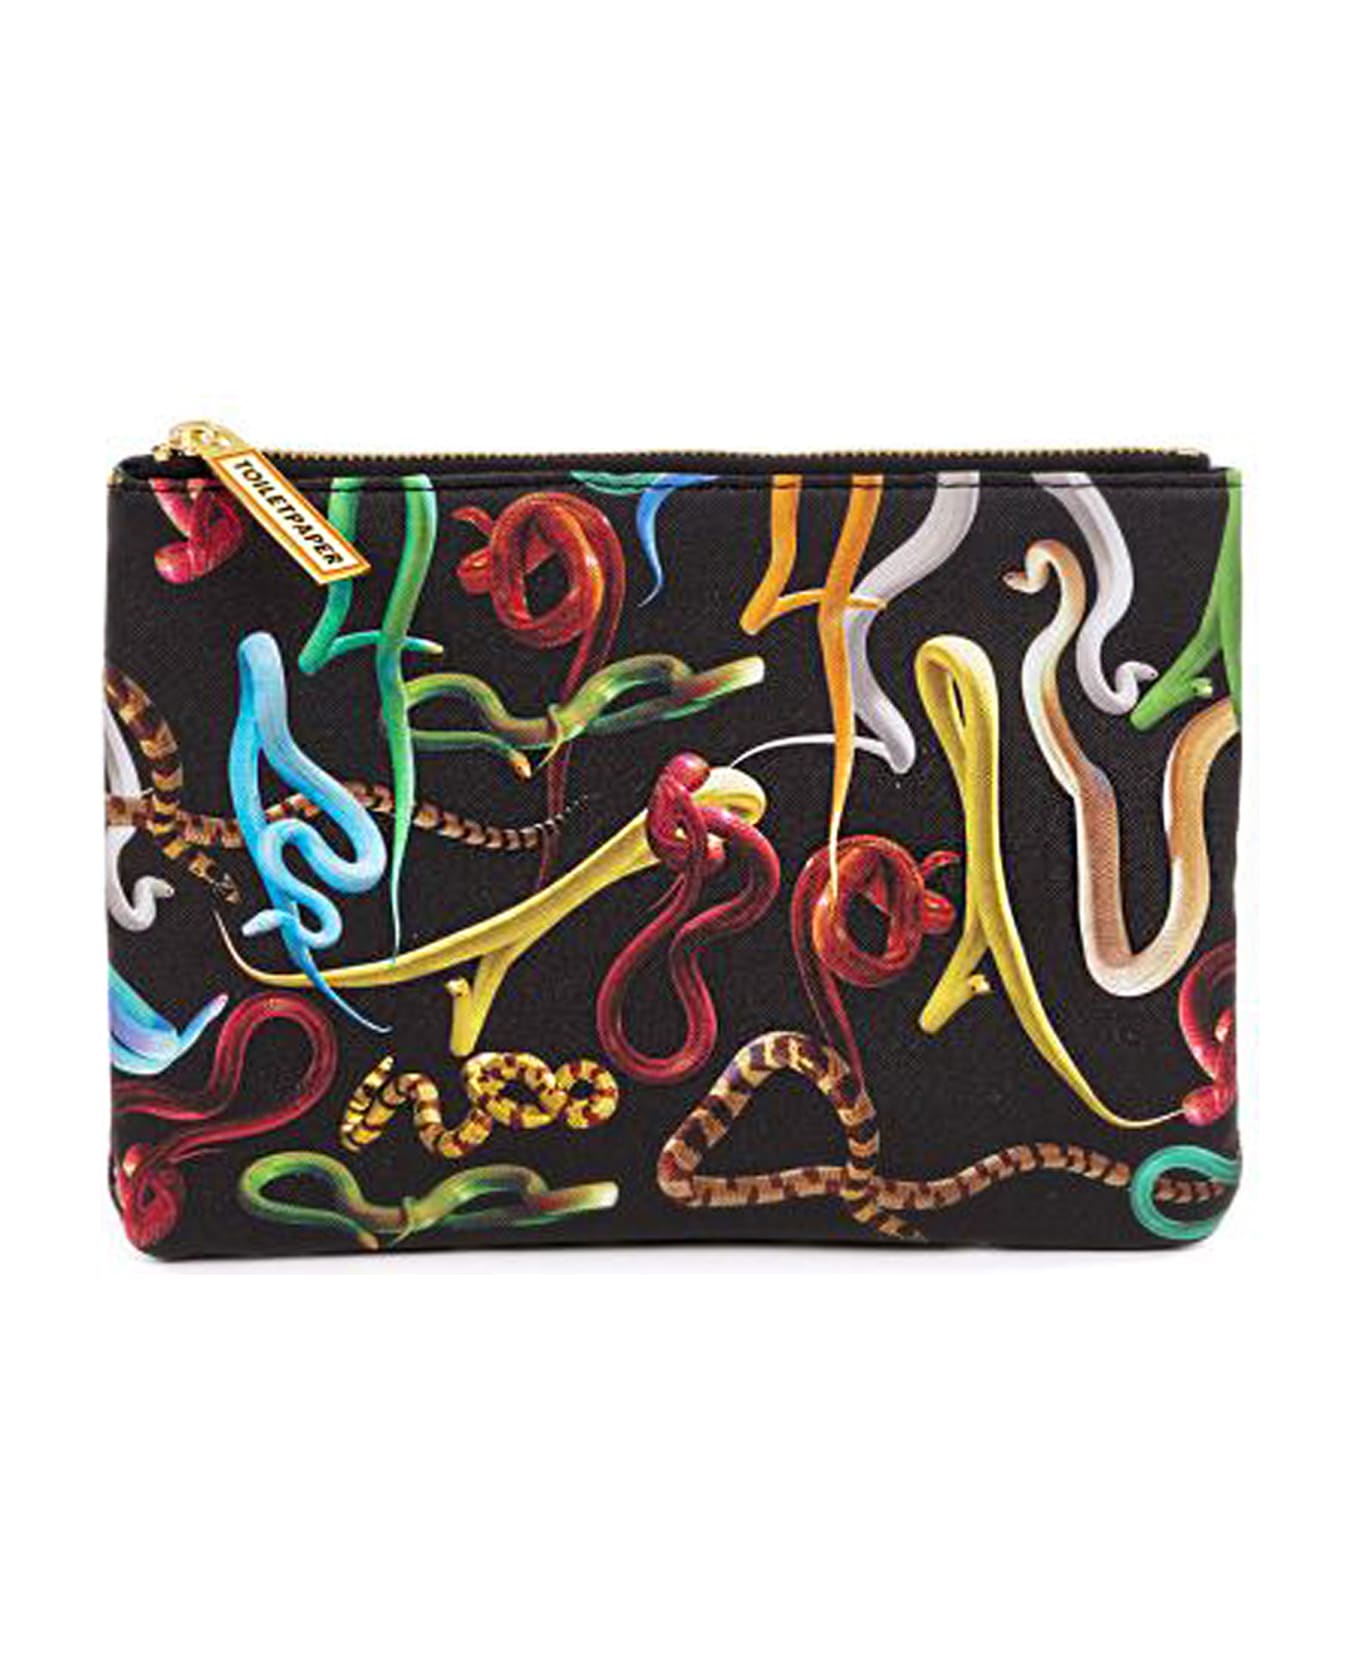 Seletti X Toiletpaper' 'snakes' Pouch - Multicolor バッグ